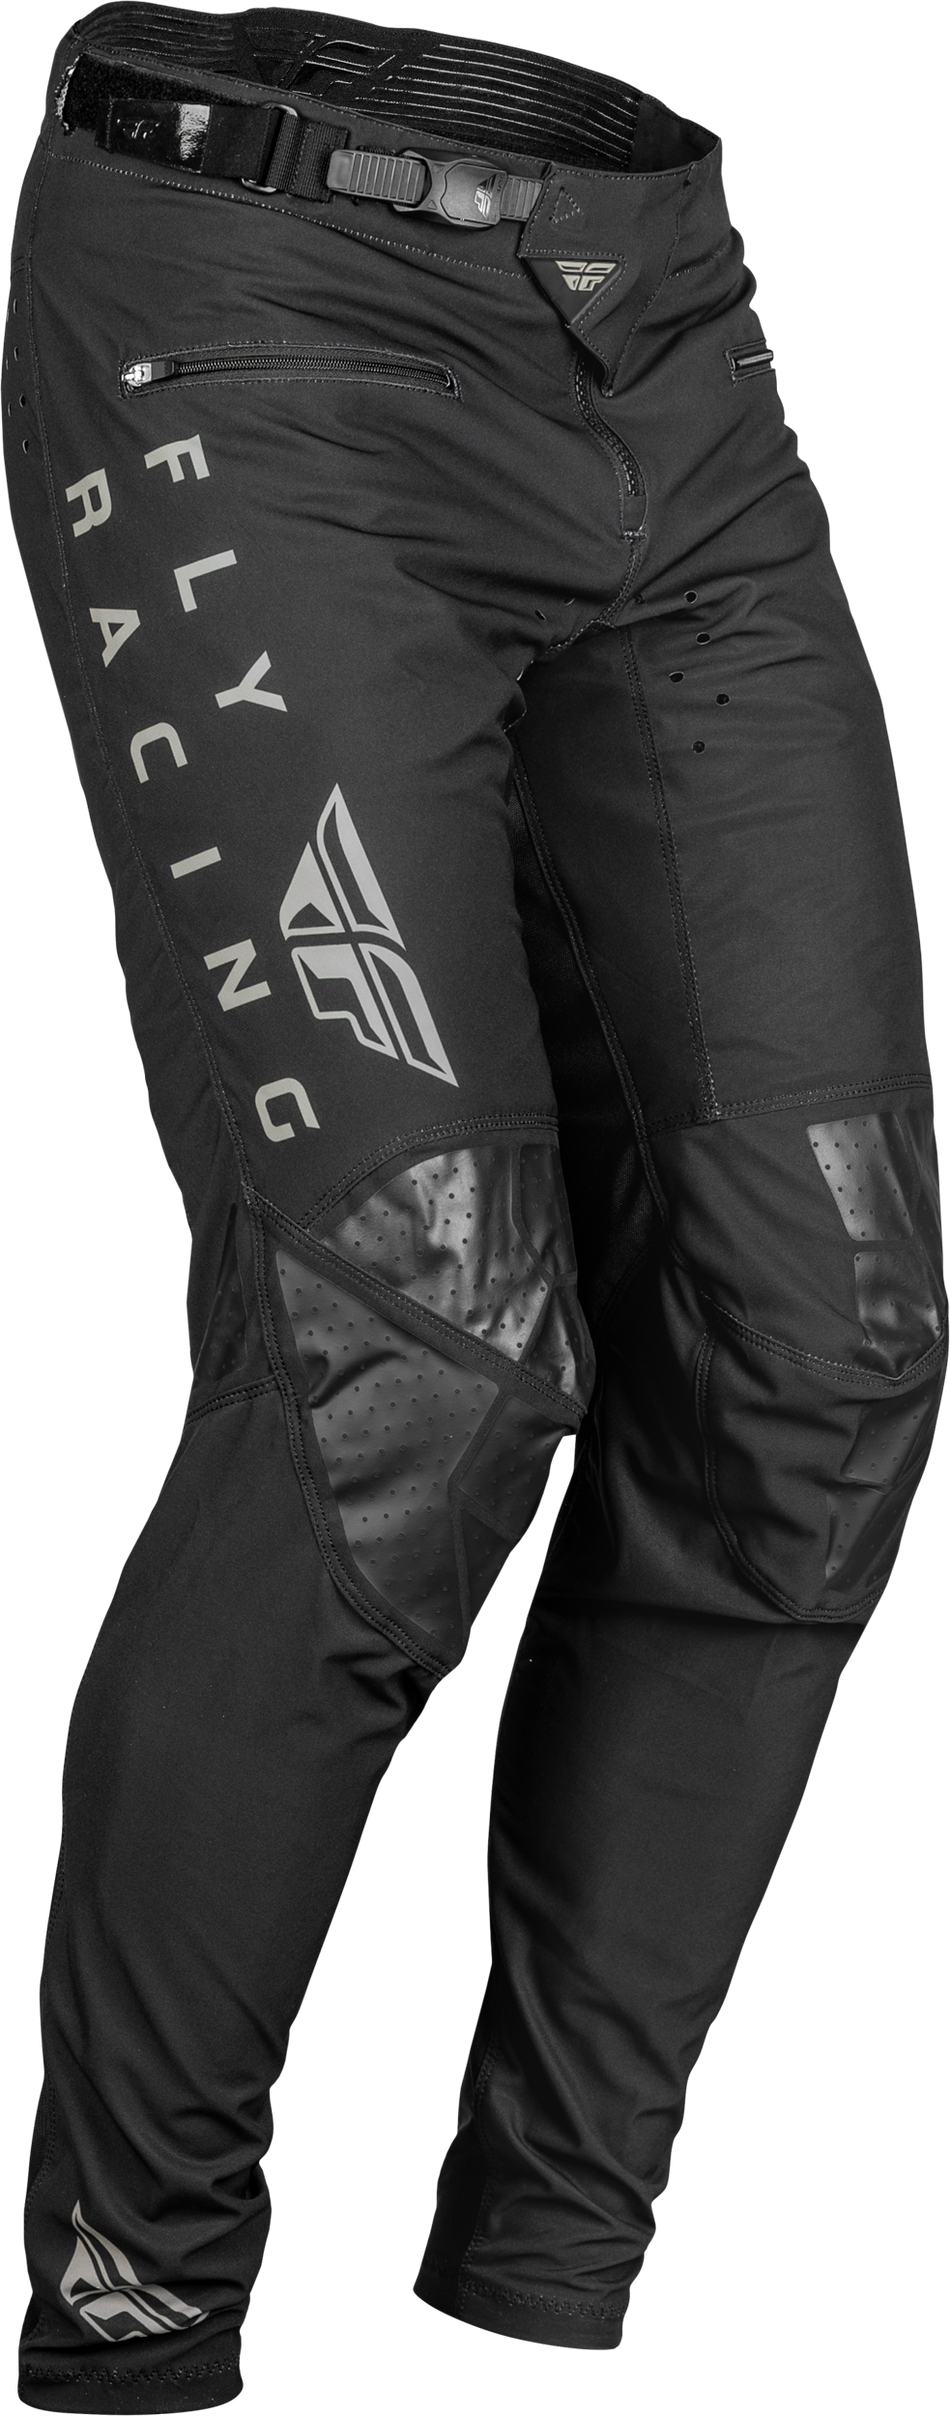 FLY RACING Radium Bicycle Pants Black/Grey Sz 34 376-04034